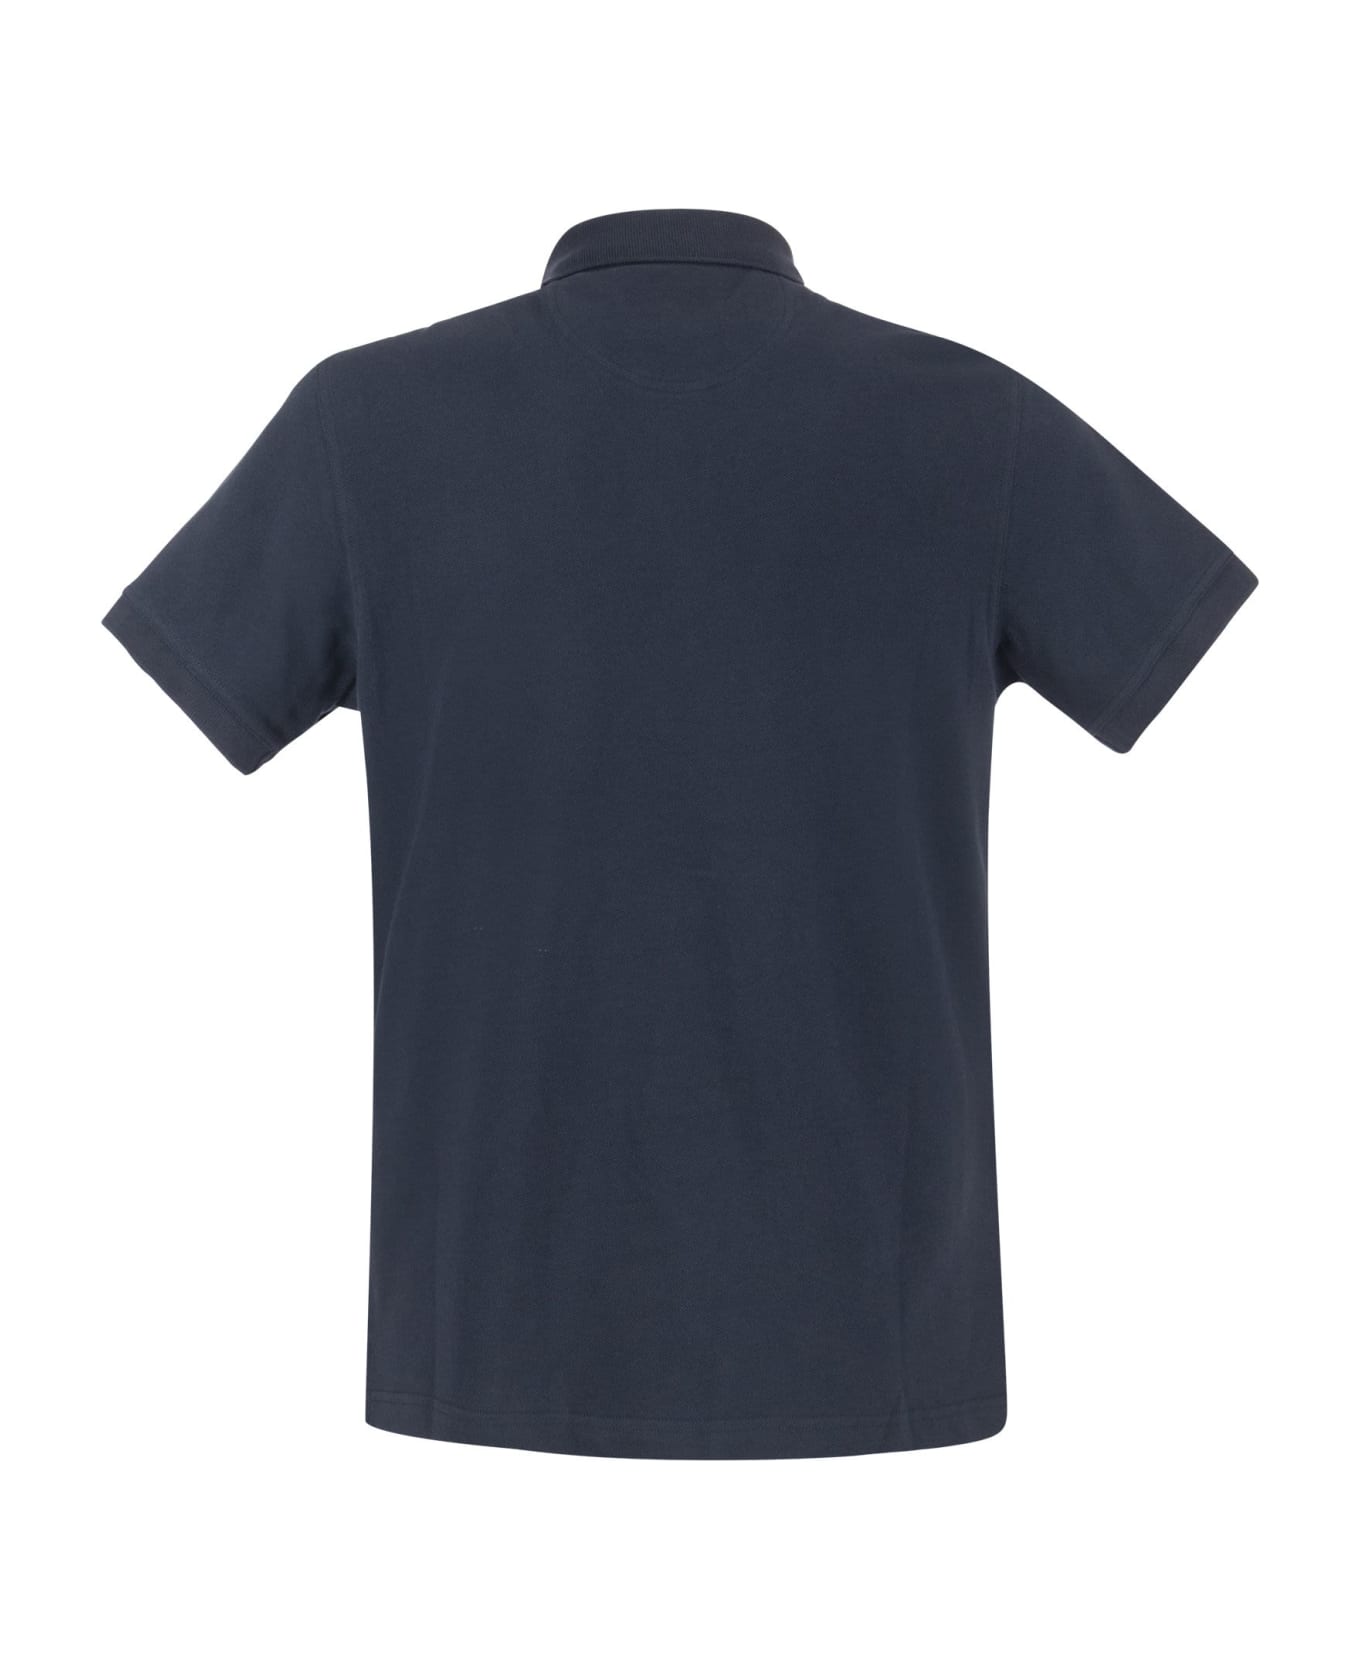 Barbour Tartan Pique Polo Shirt - Navy Blue ポロシャツ